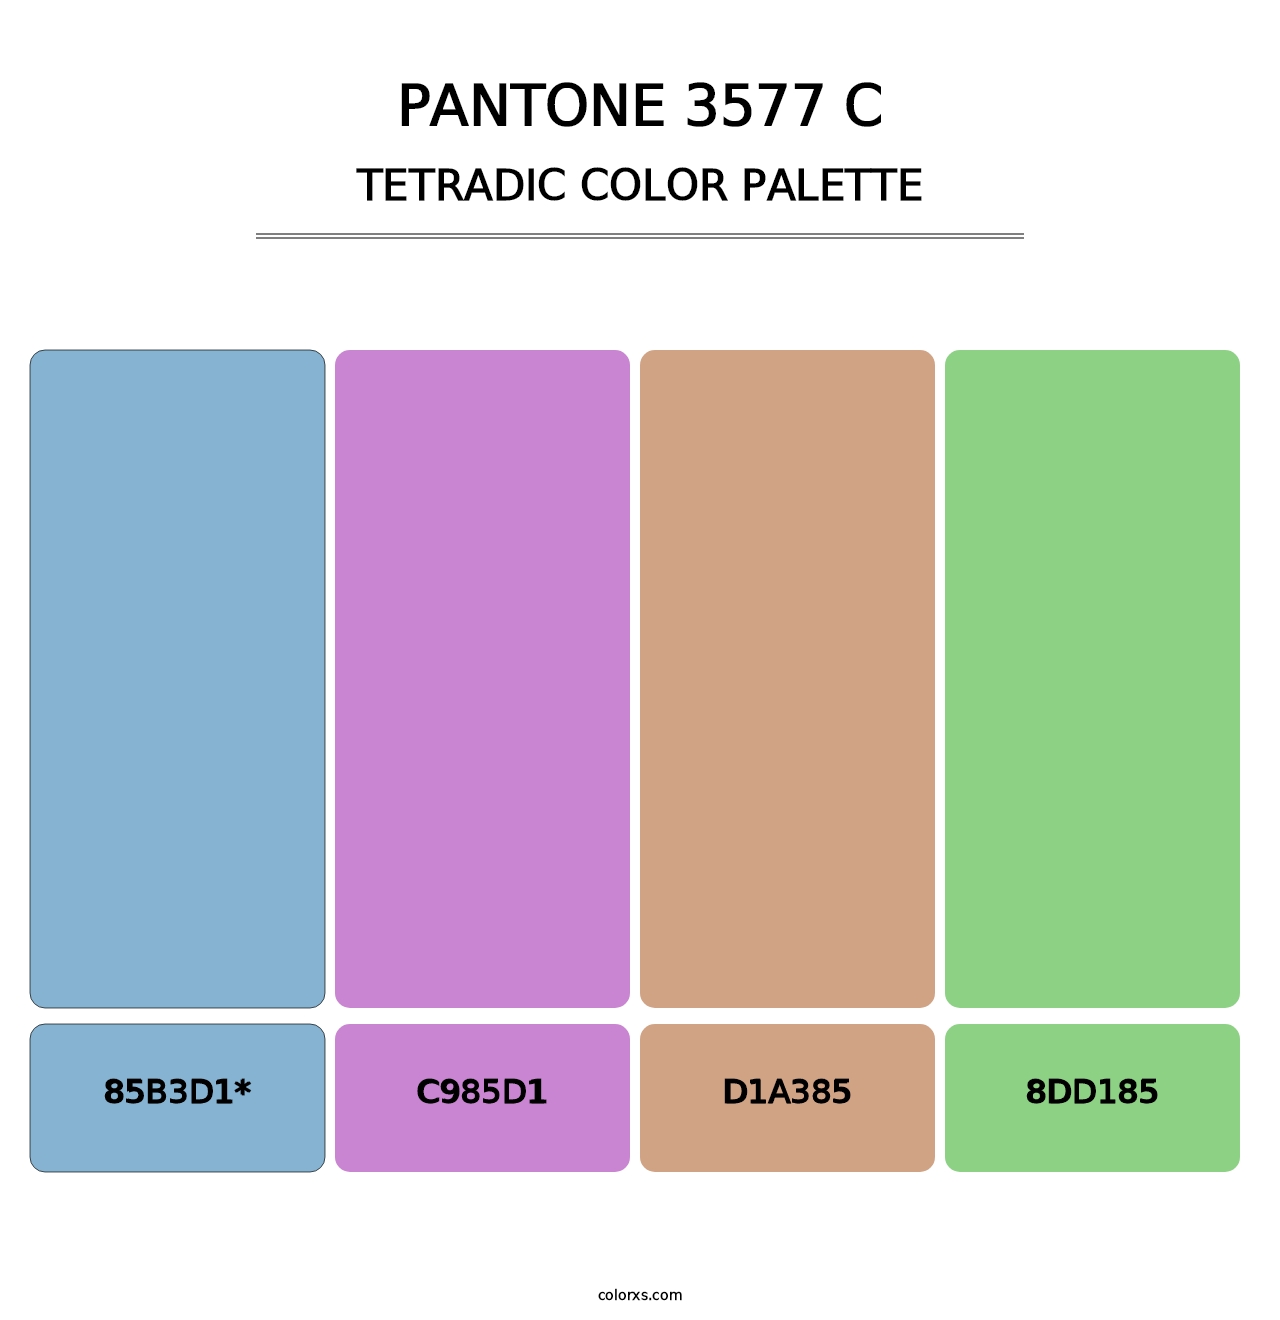 PANTONE 3577 C - Tetradic Color Palette